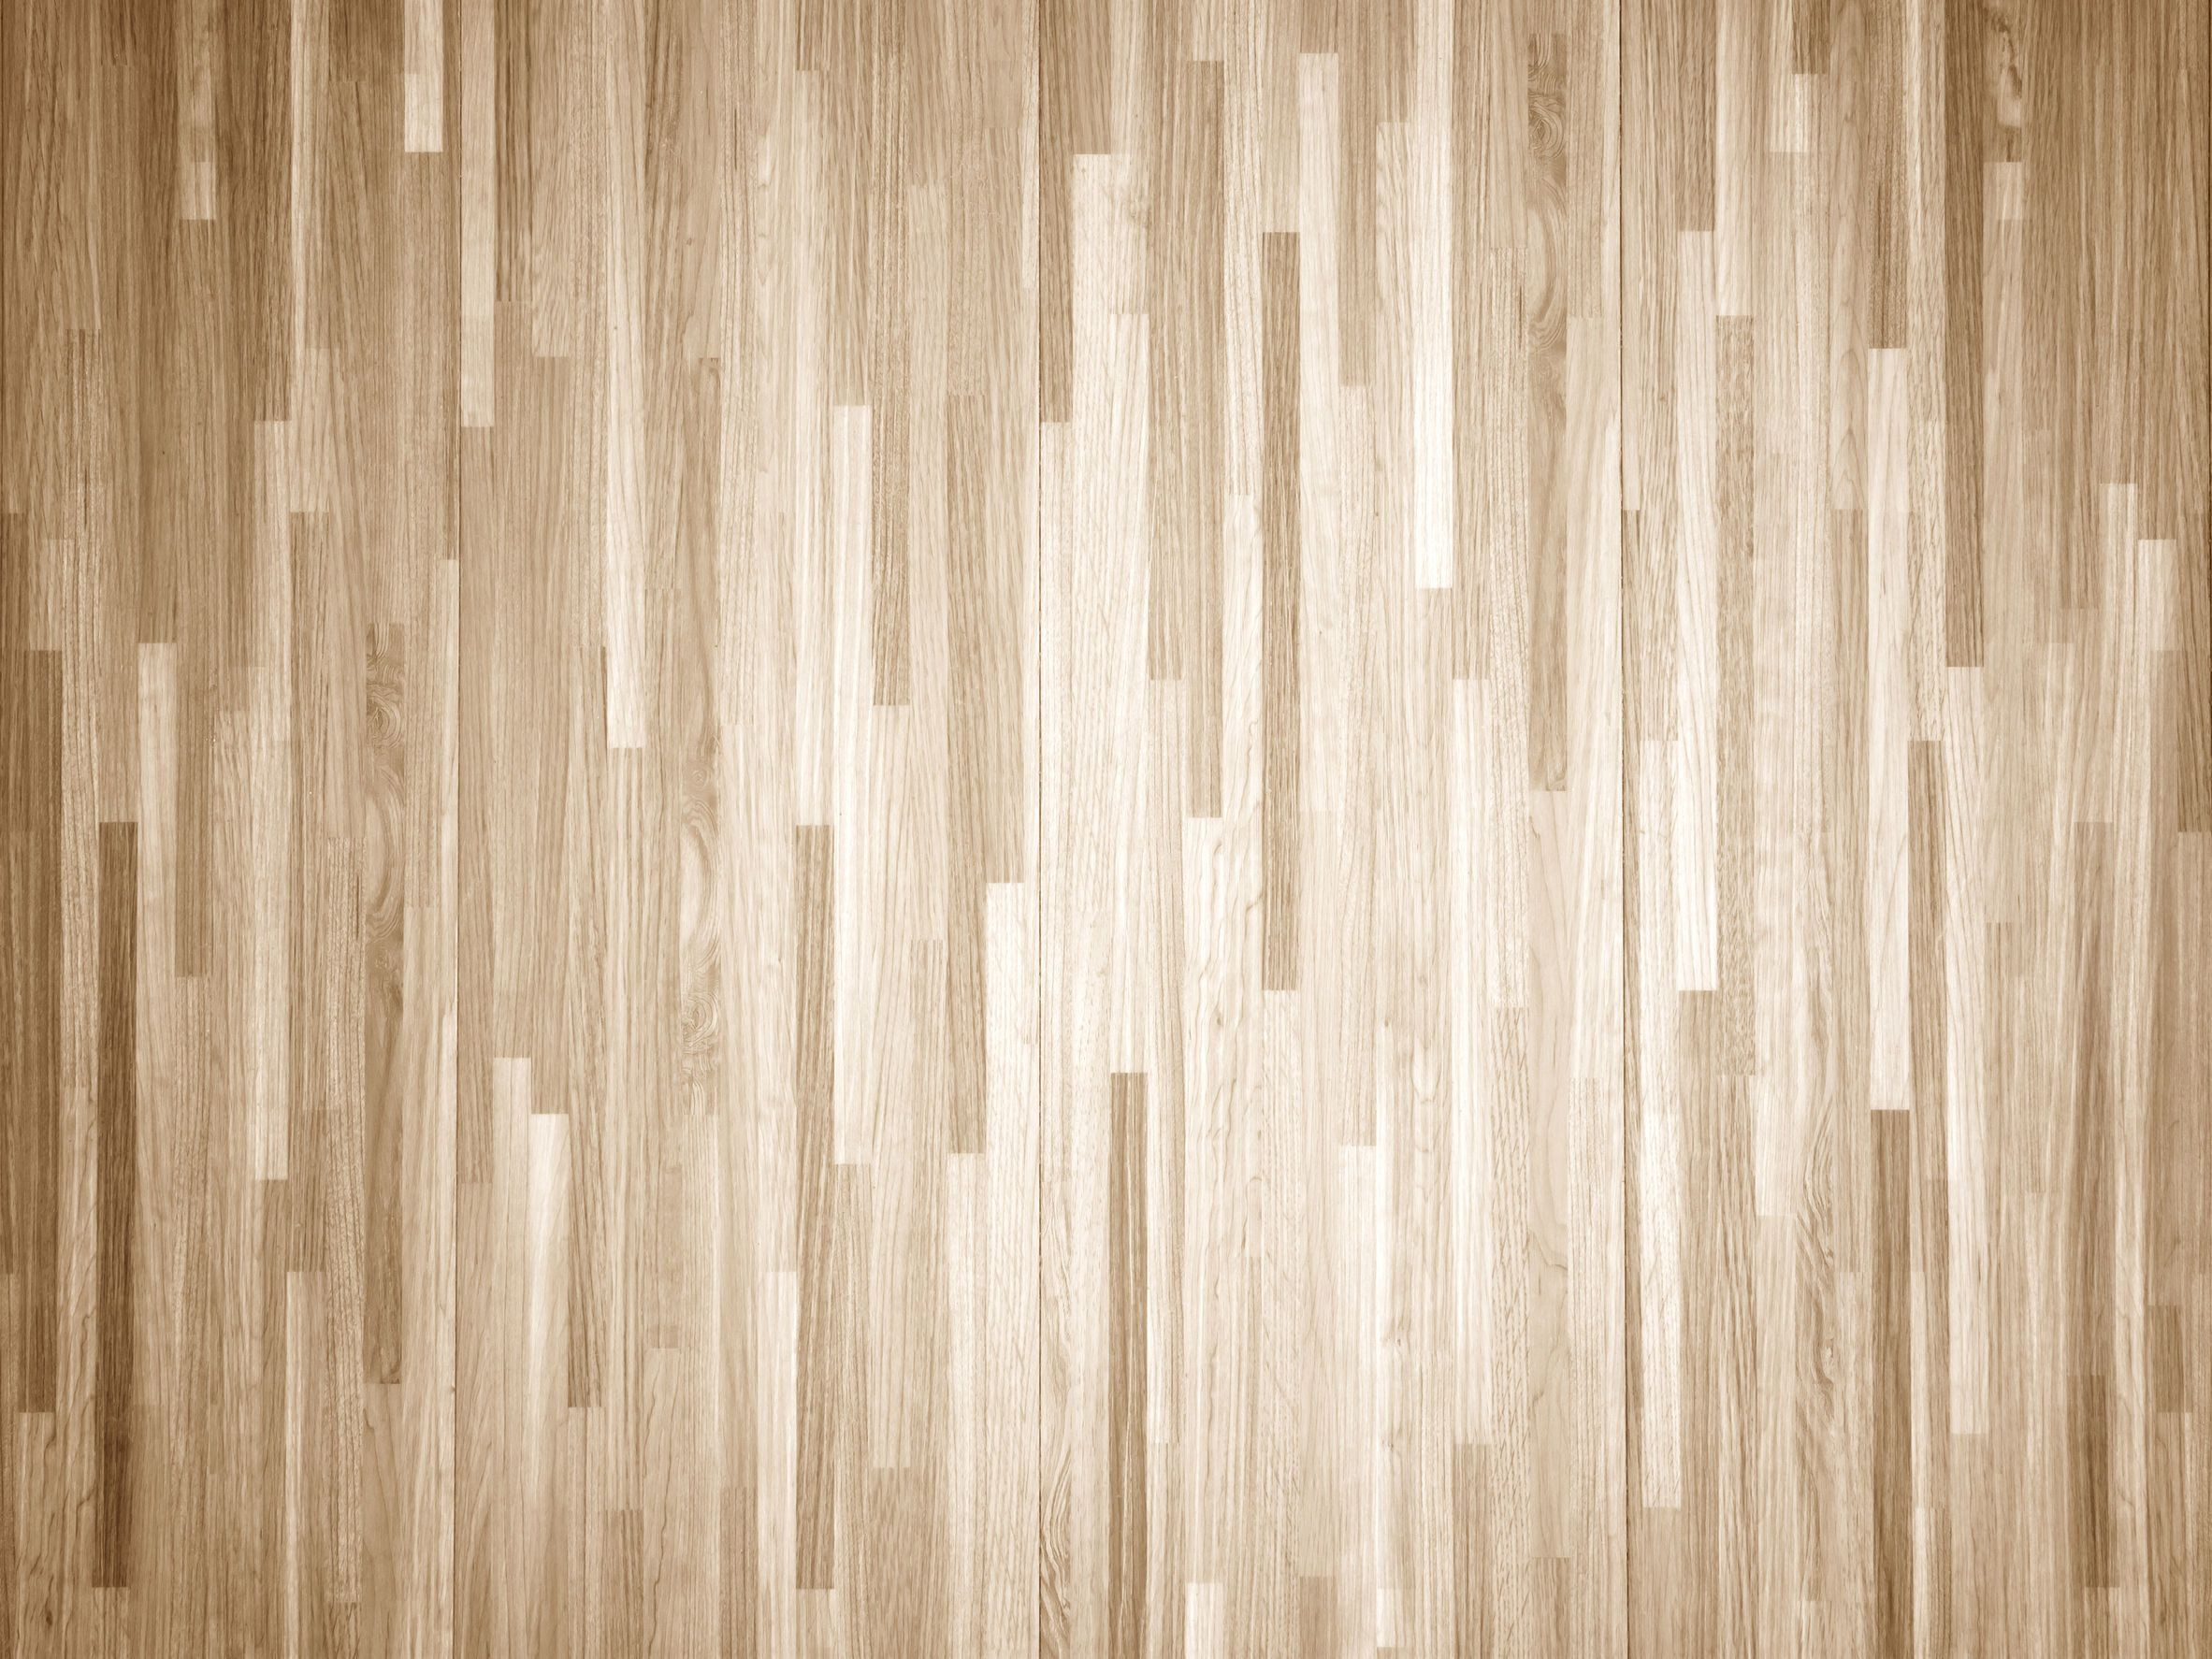 18 Nice Hardwood Floor Refinishing Waterville Me 2024 free download hardwood floor refinishing waterville me of how to chemically strip wood floors woodfloordoctor com inside you